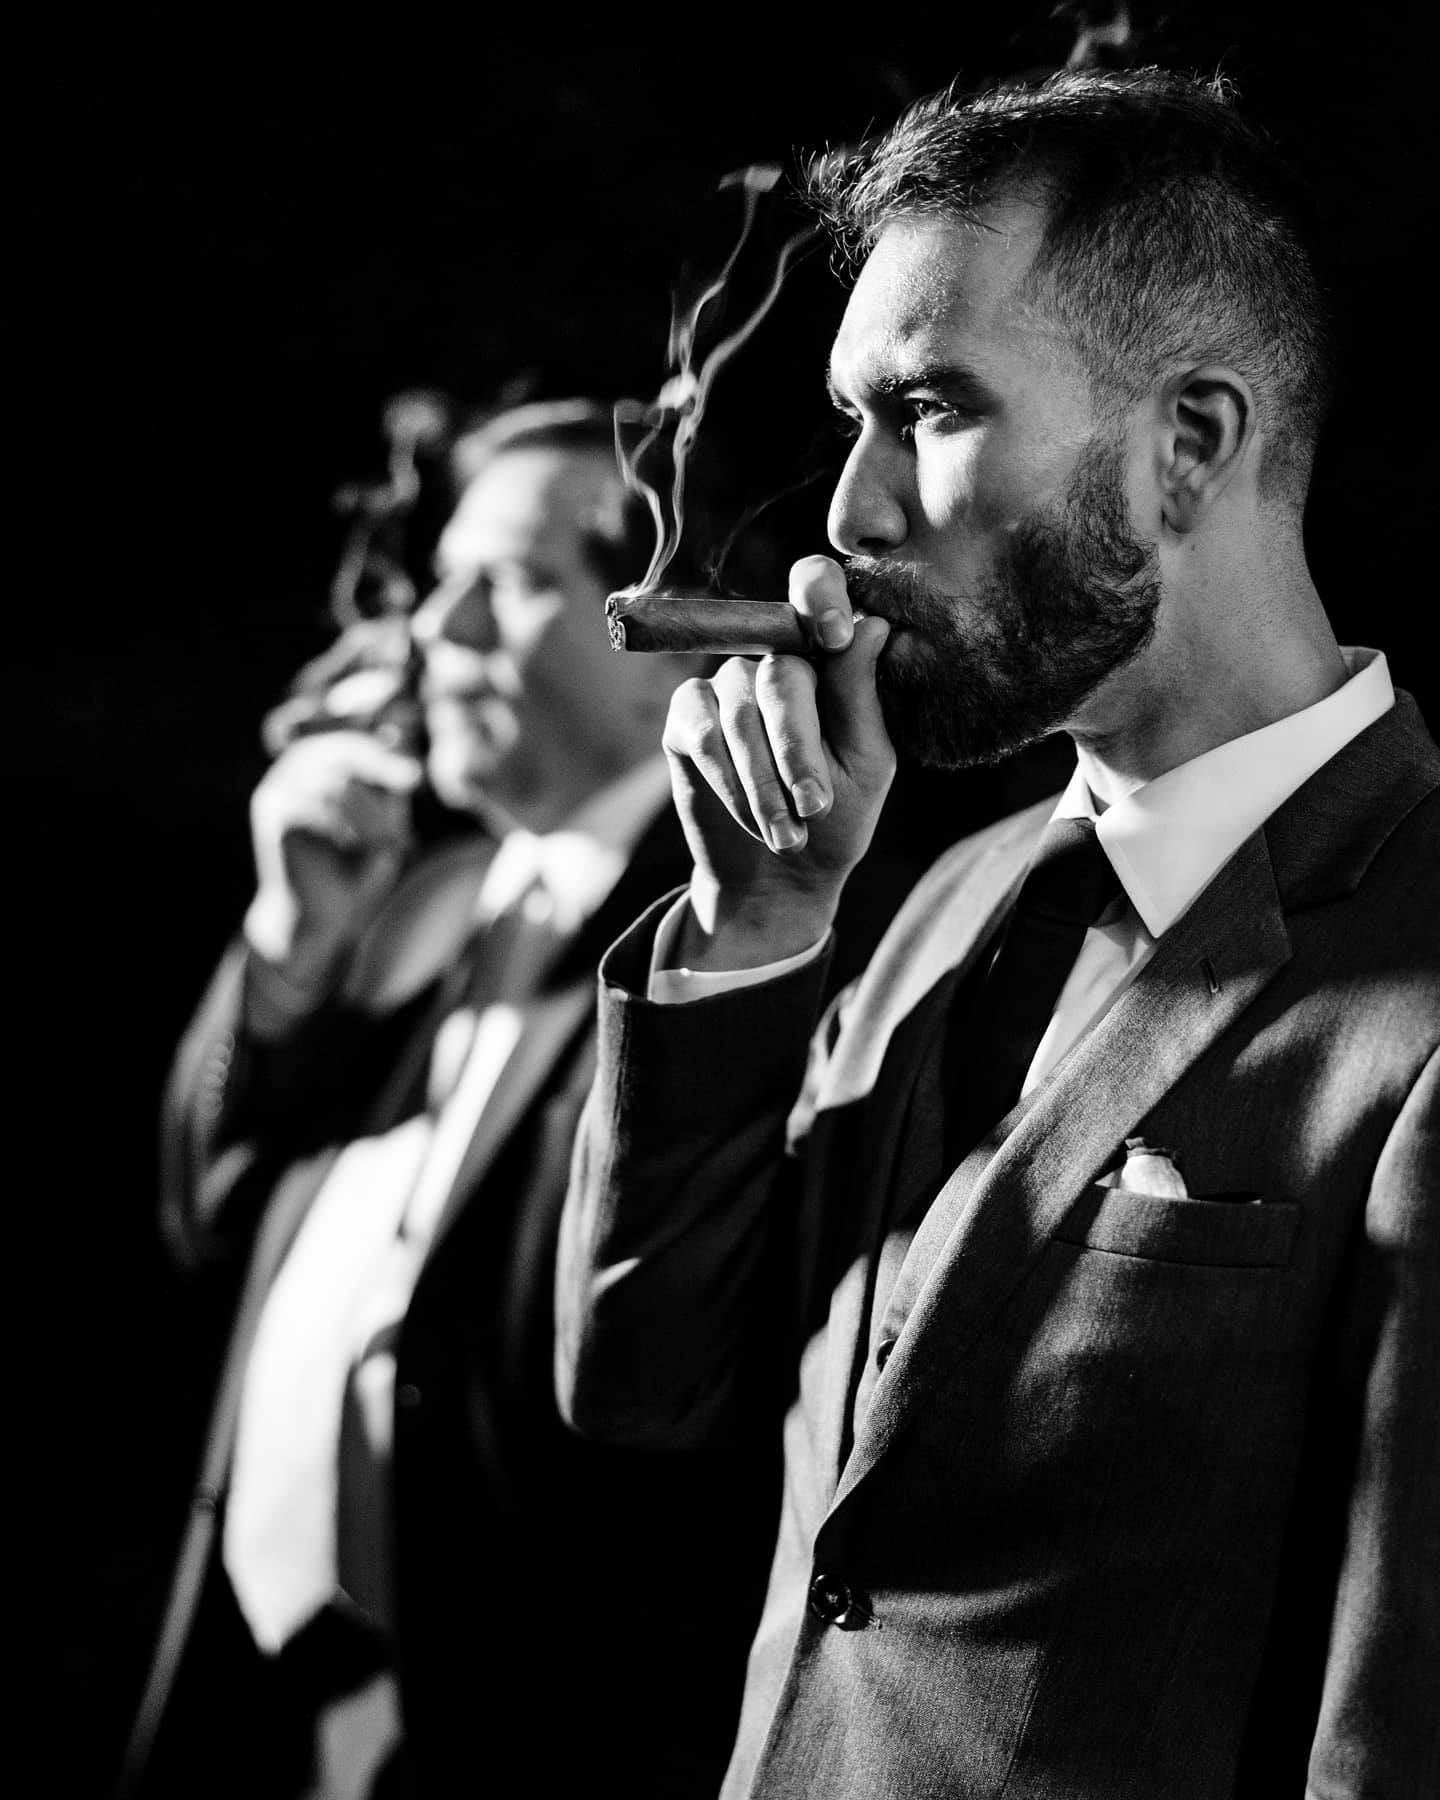 A monochrome portrait of a groom smoking cigar